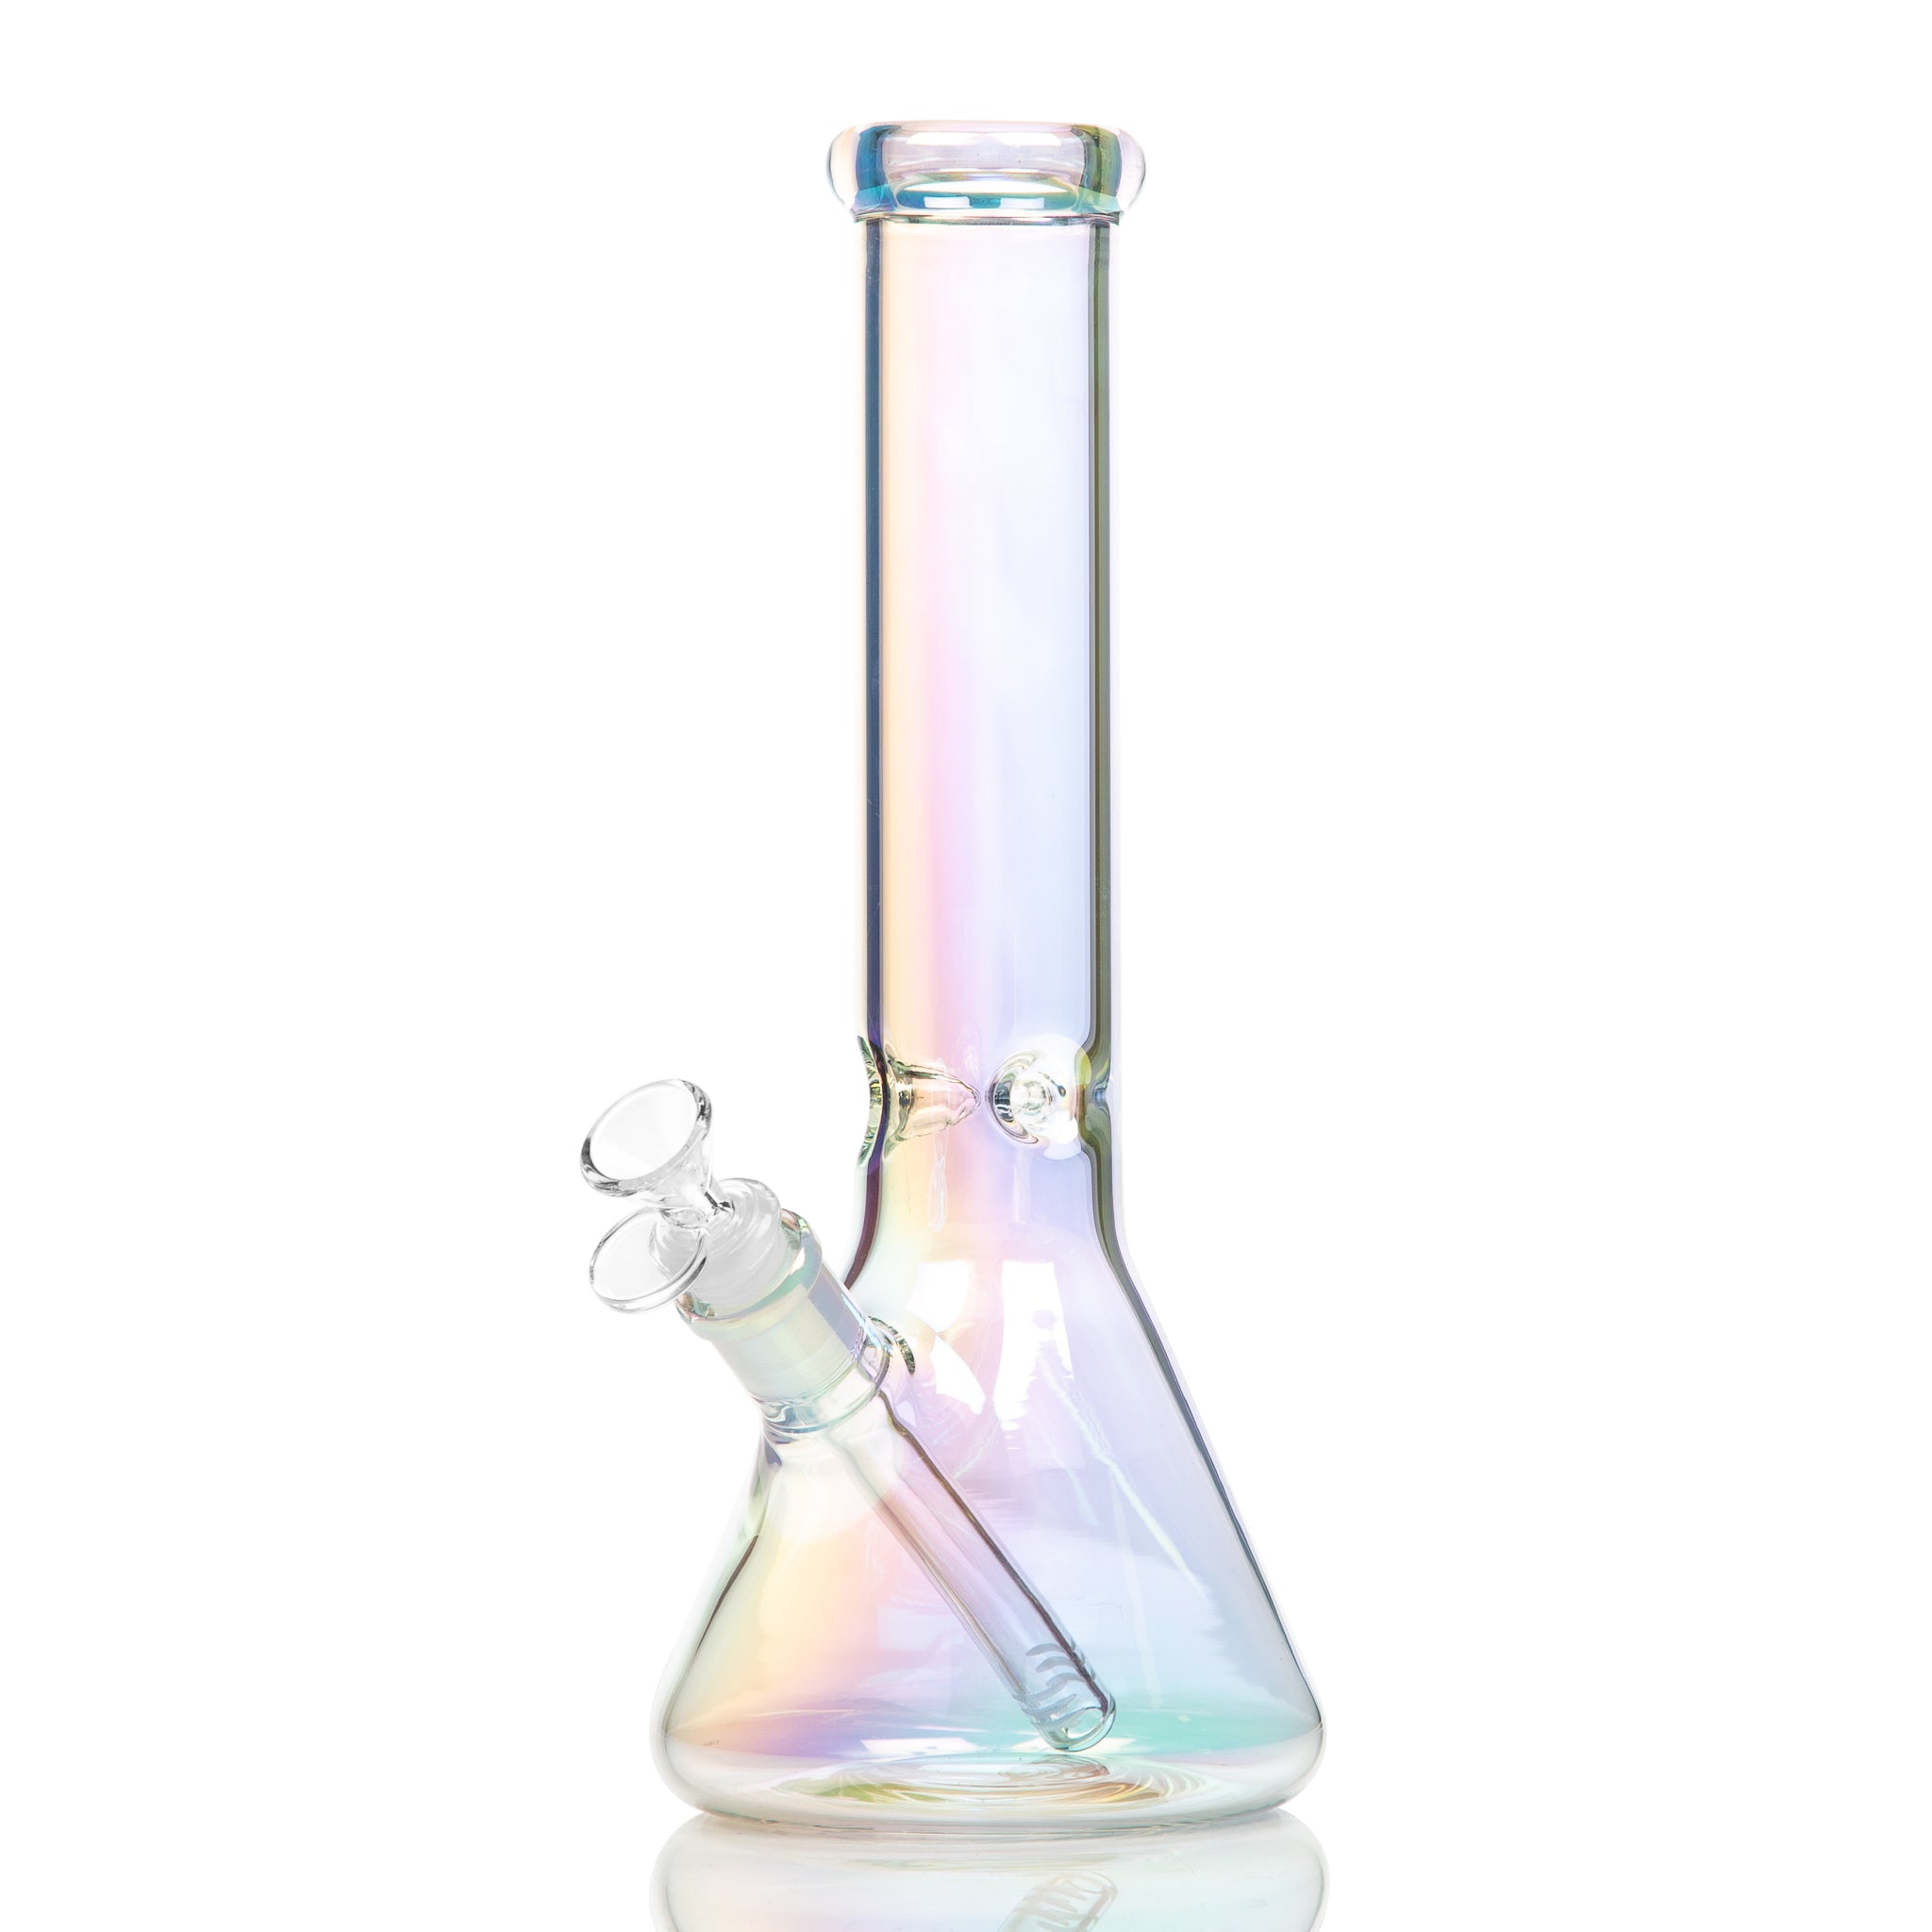 Chromatic holographic glass beaker bong available Australia wide.